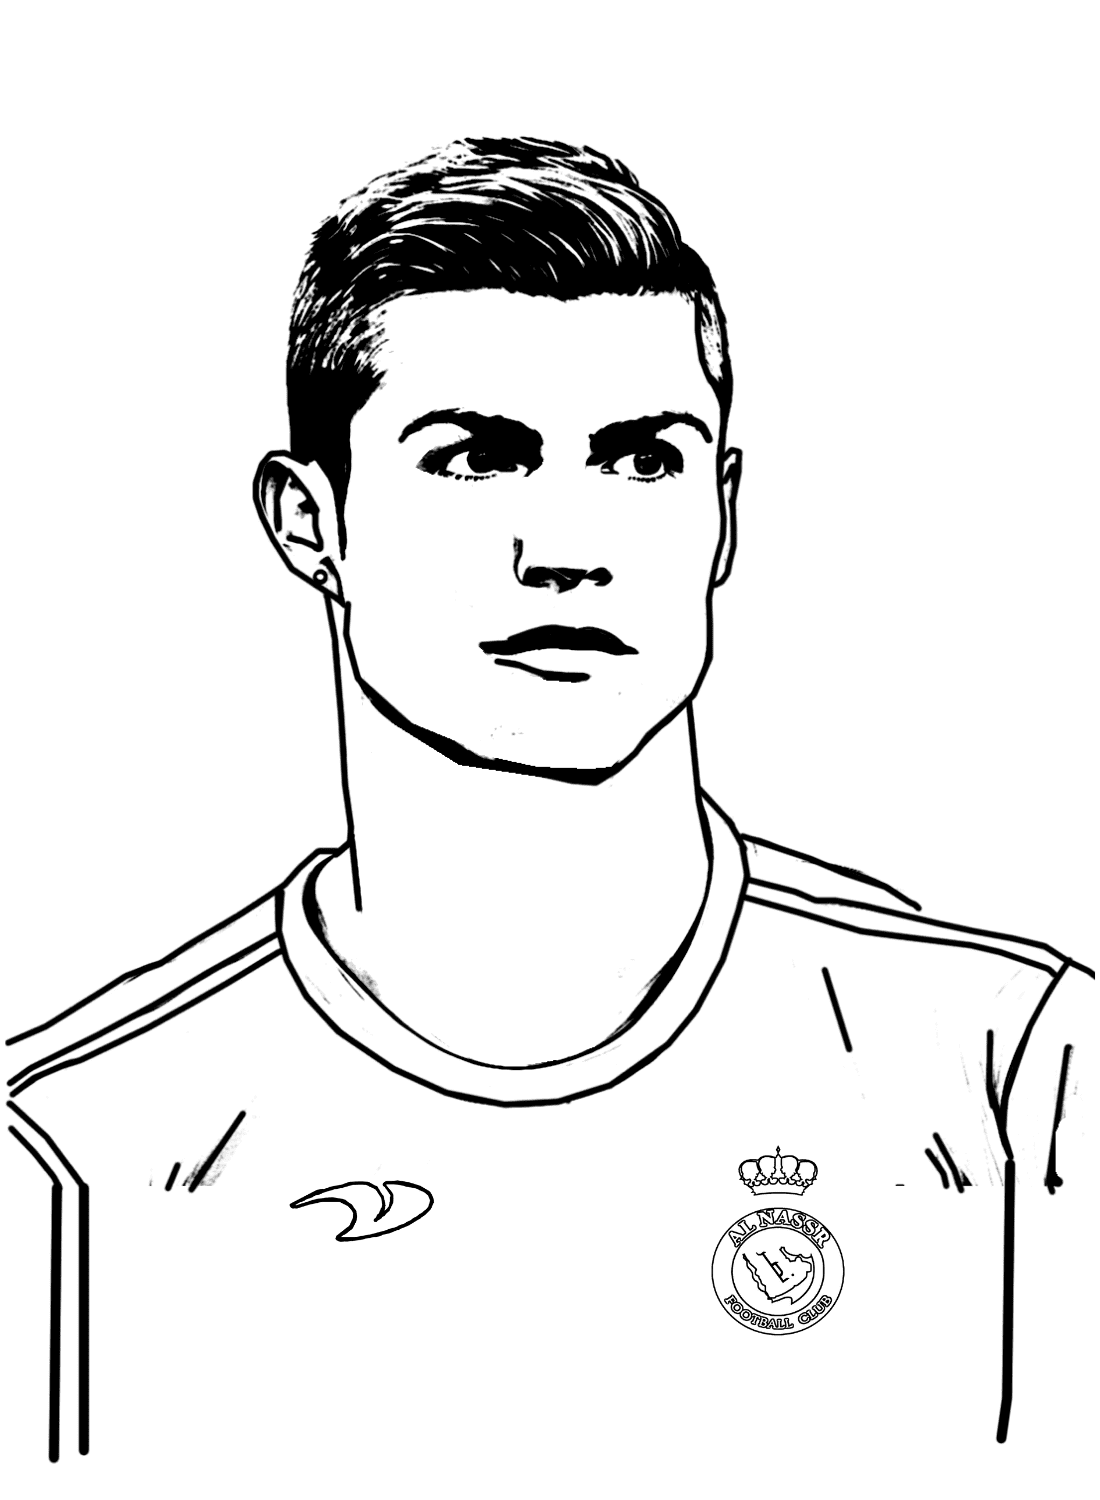 Coole Cristiano Ronaldo tekening kleurplaten van Cristiano Ronaldo